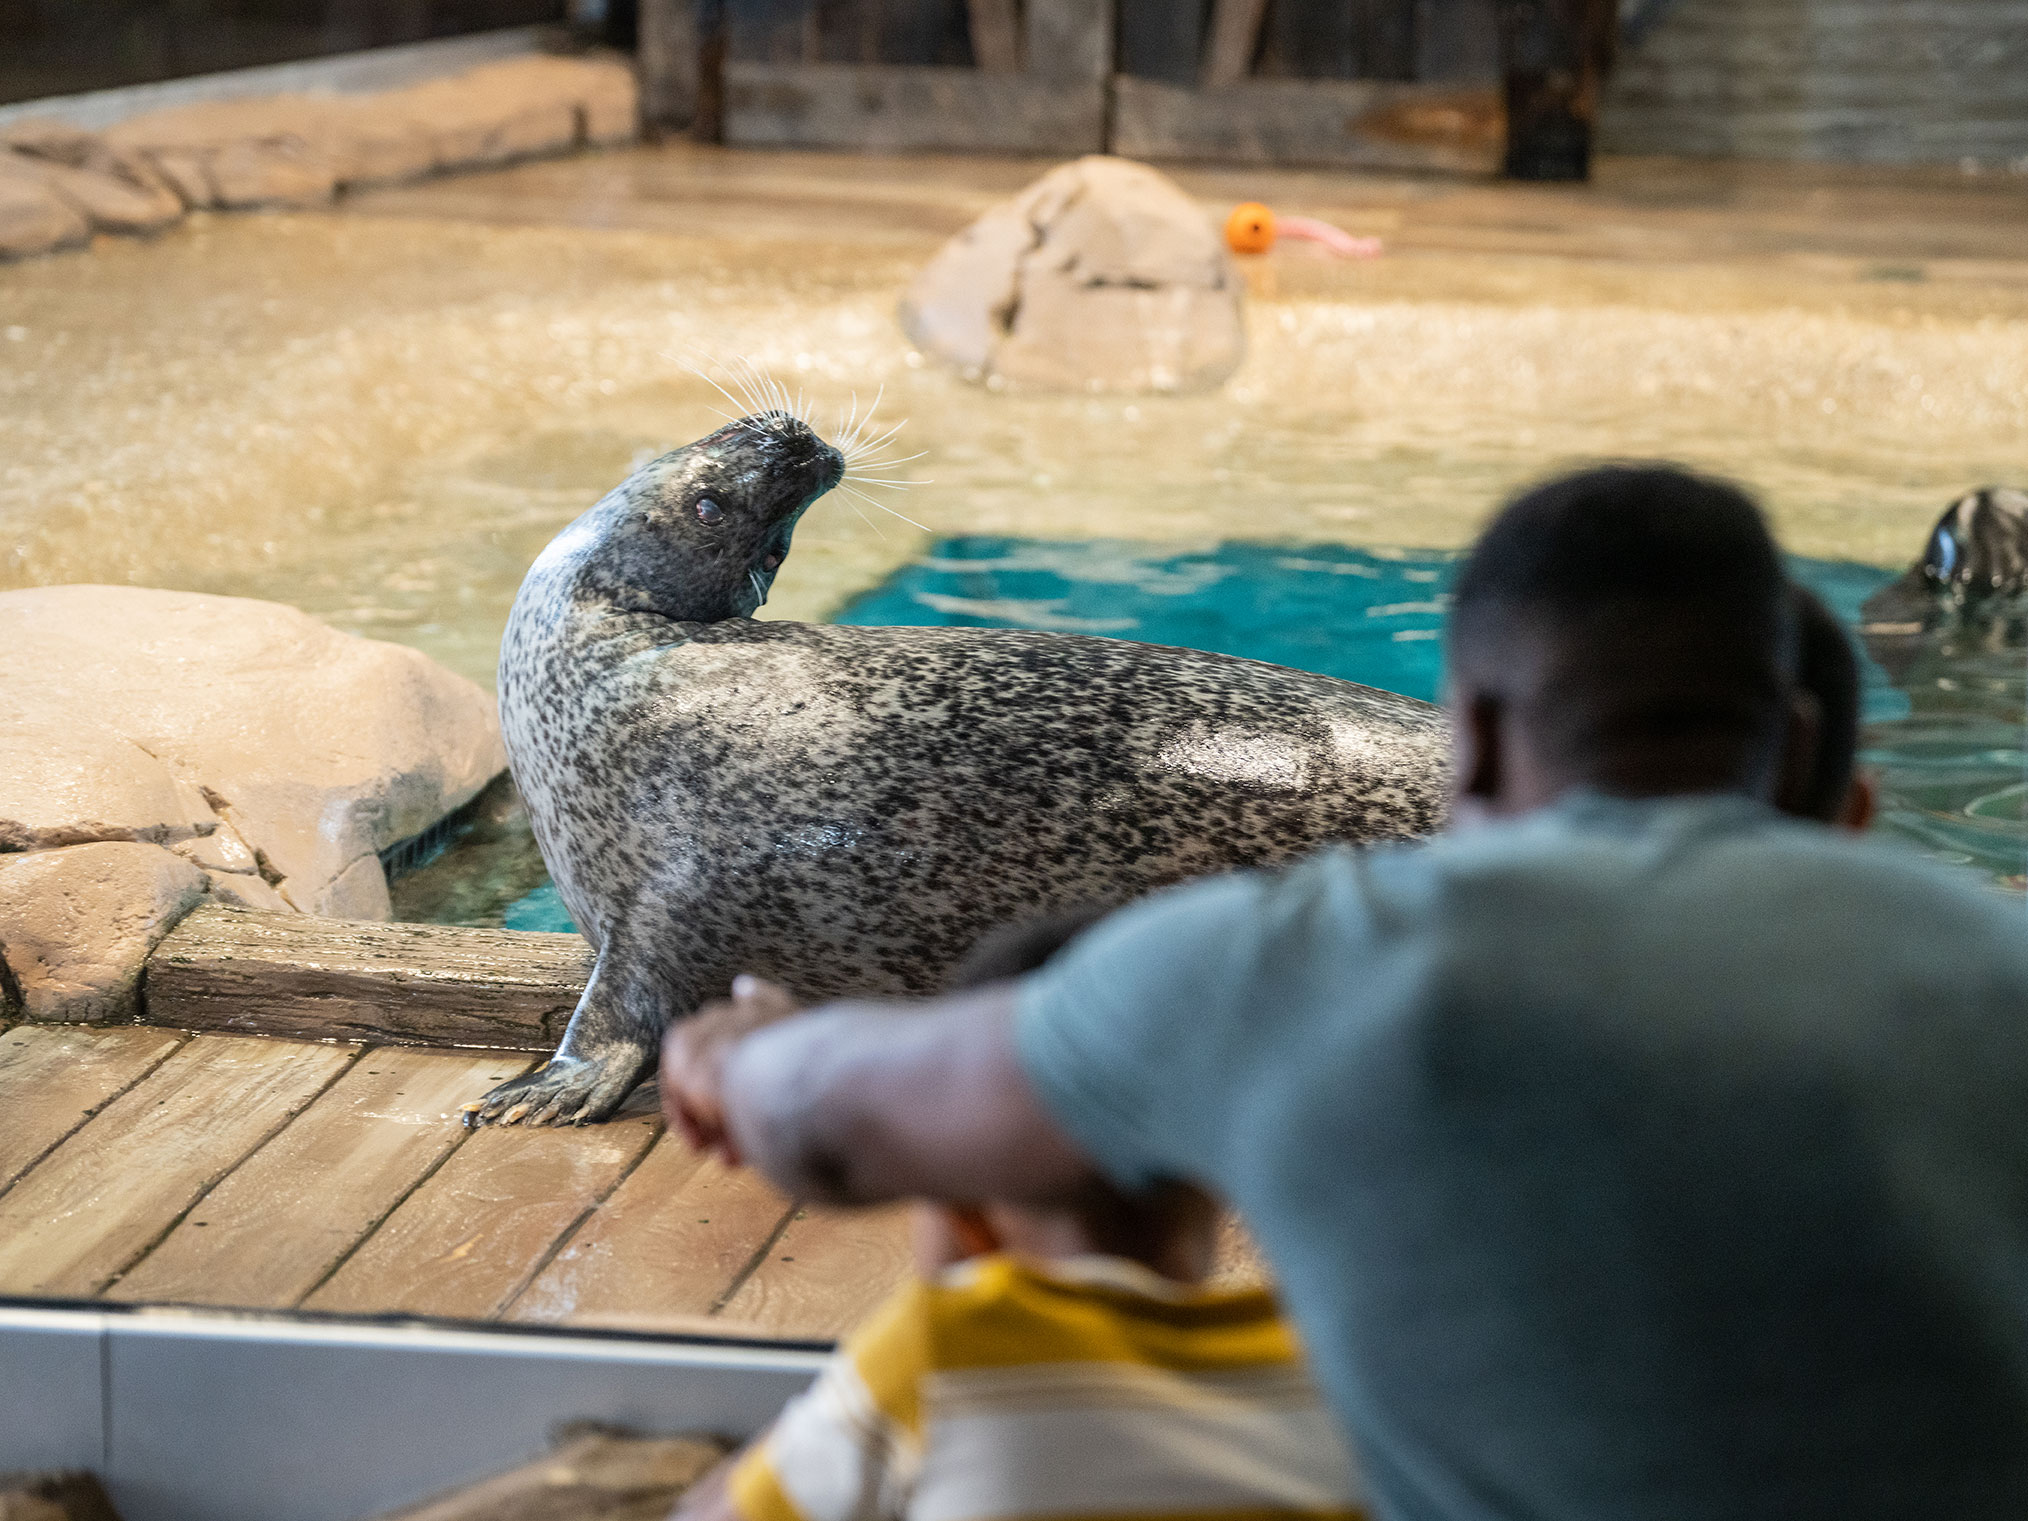 Seal at Jenkinson's Aquarium